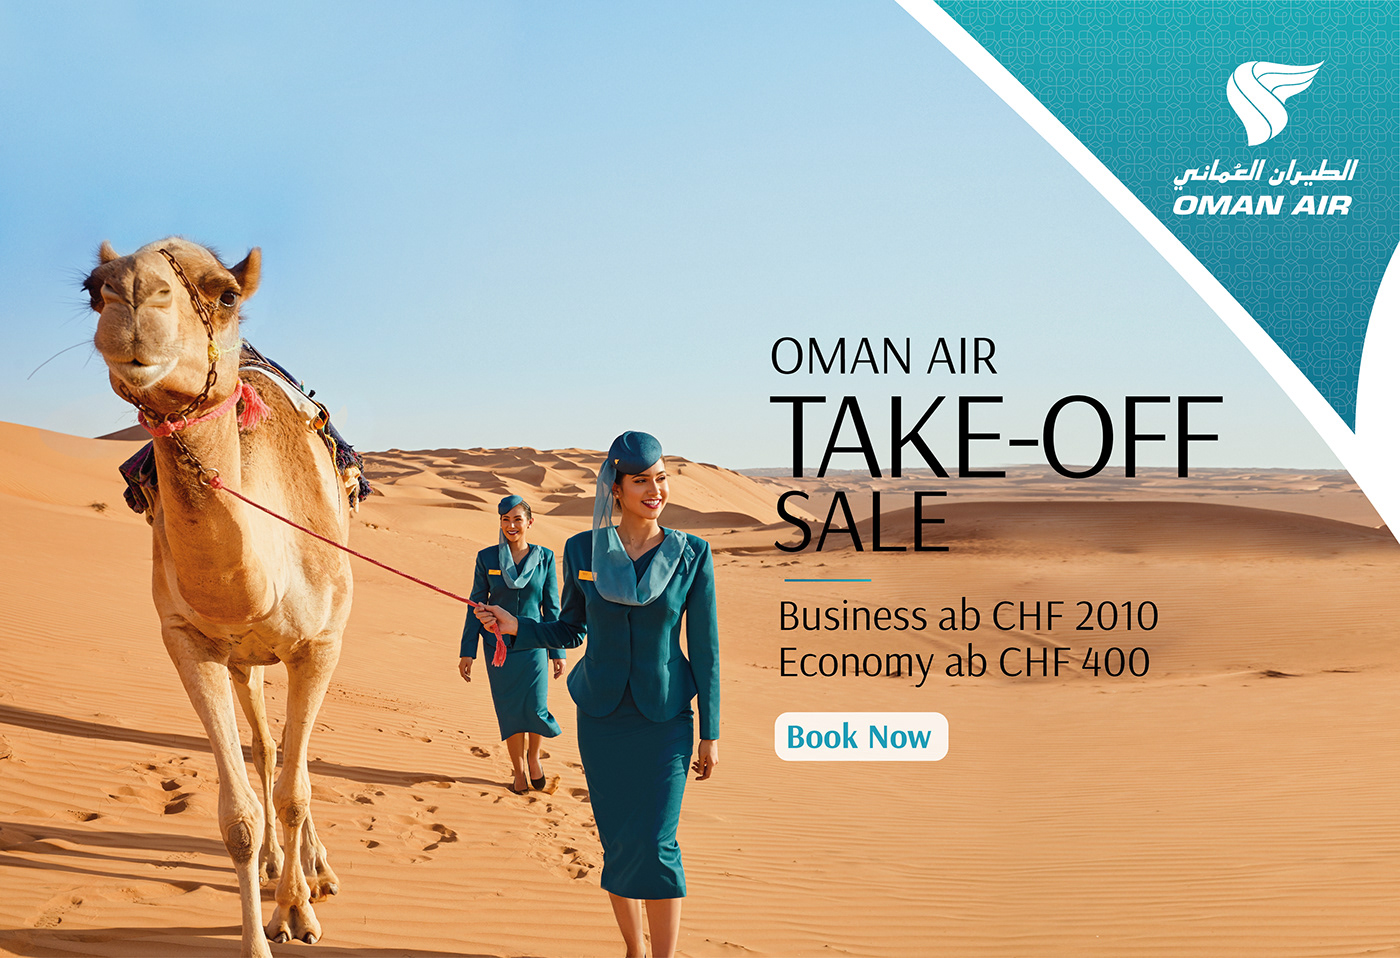 airline campaign brand campaign communication concepts designs Oman Air